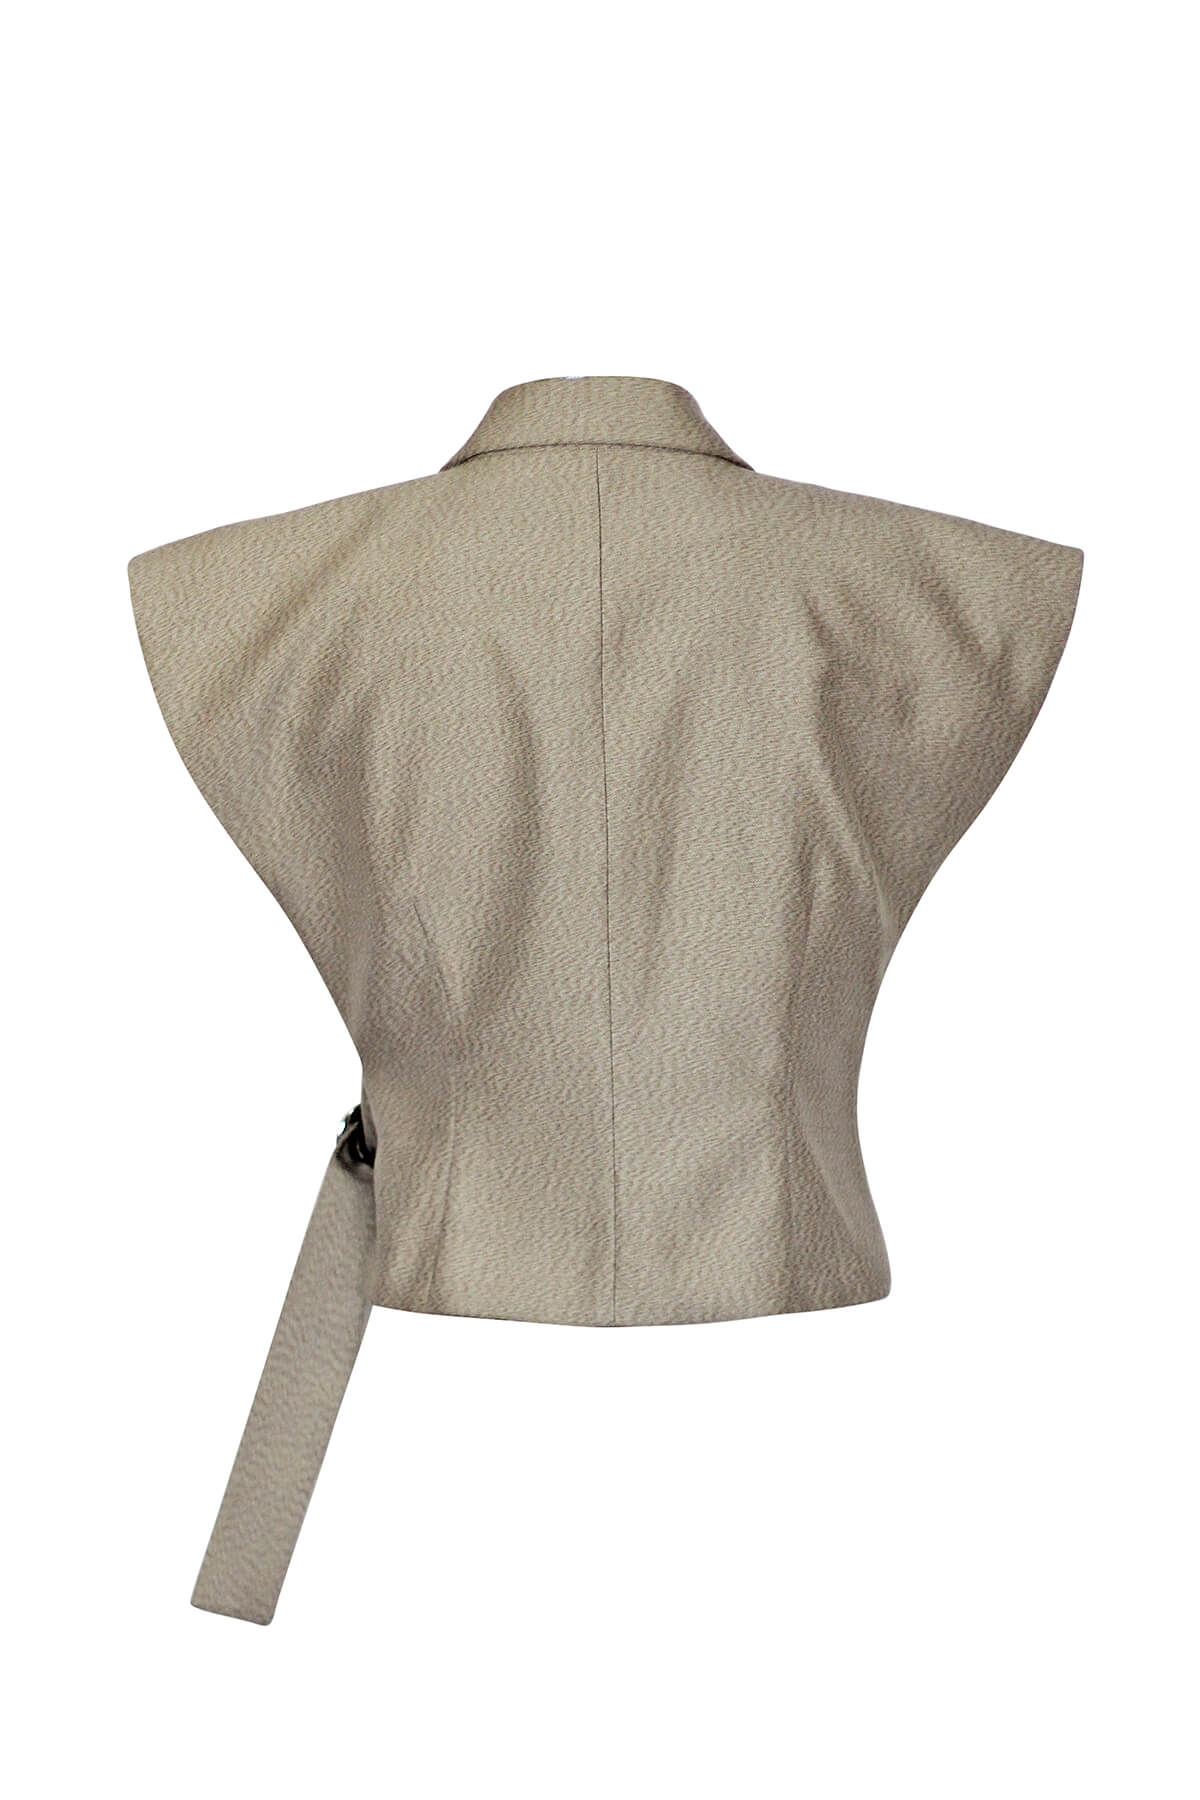 Buckle Belted Vest - Ivory back view